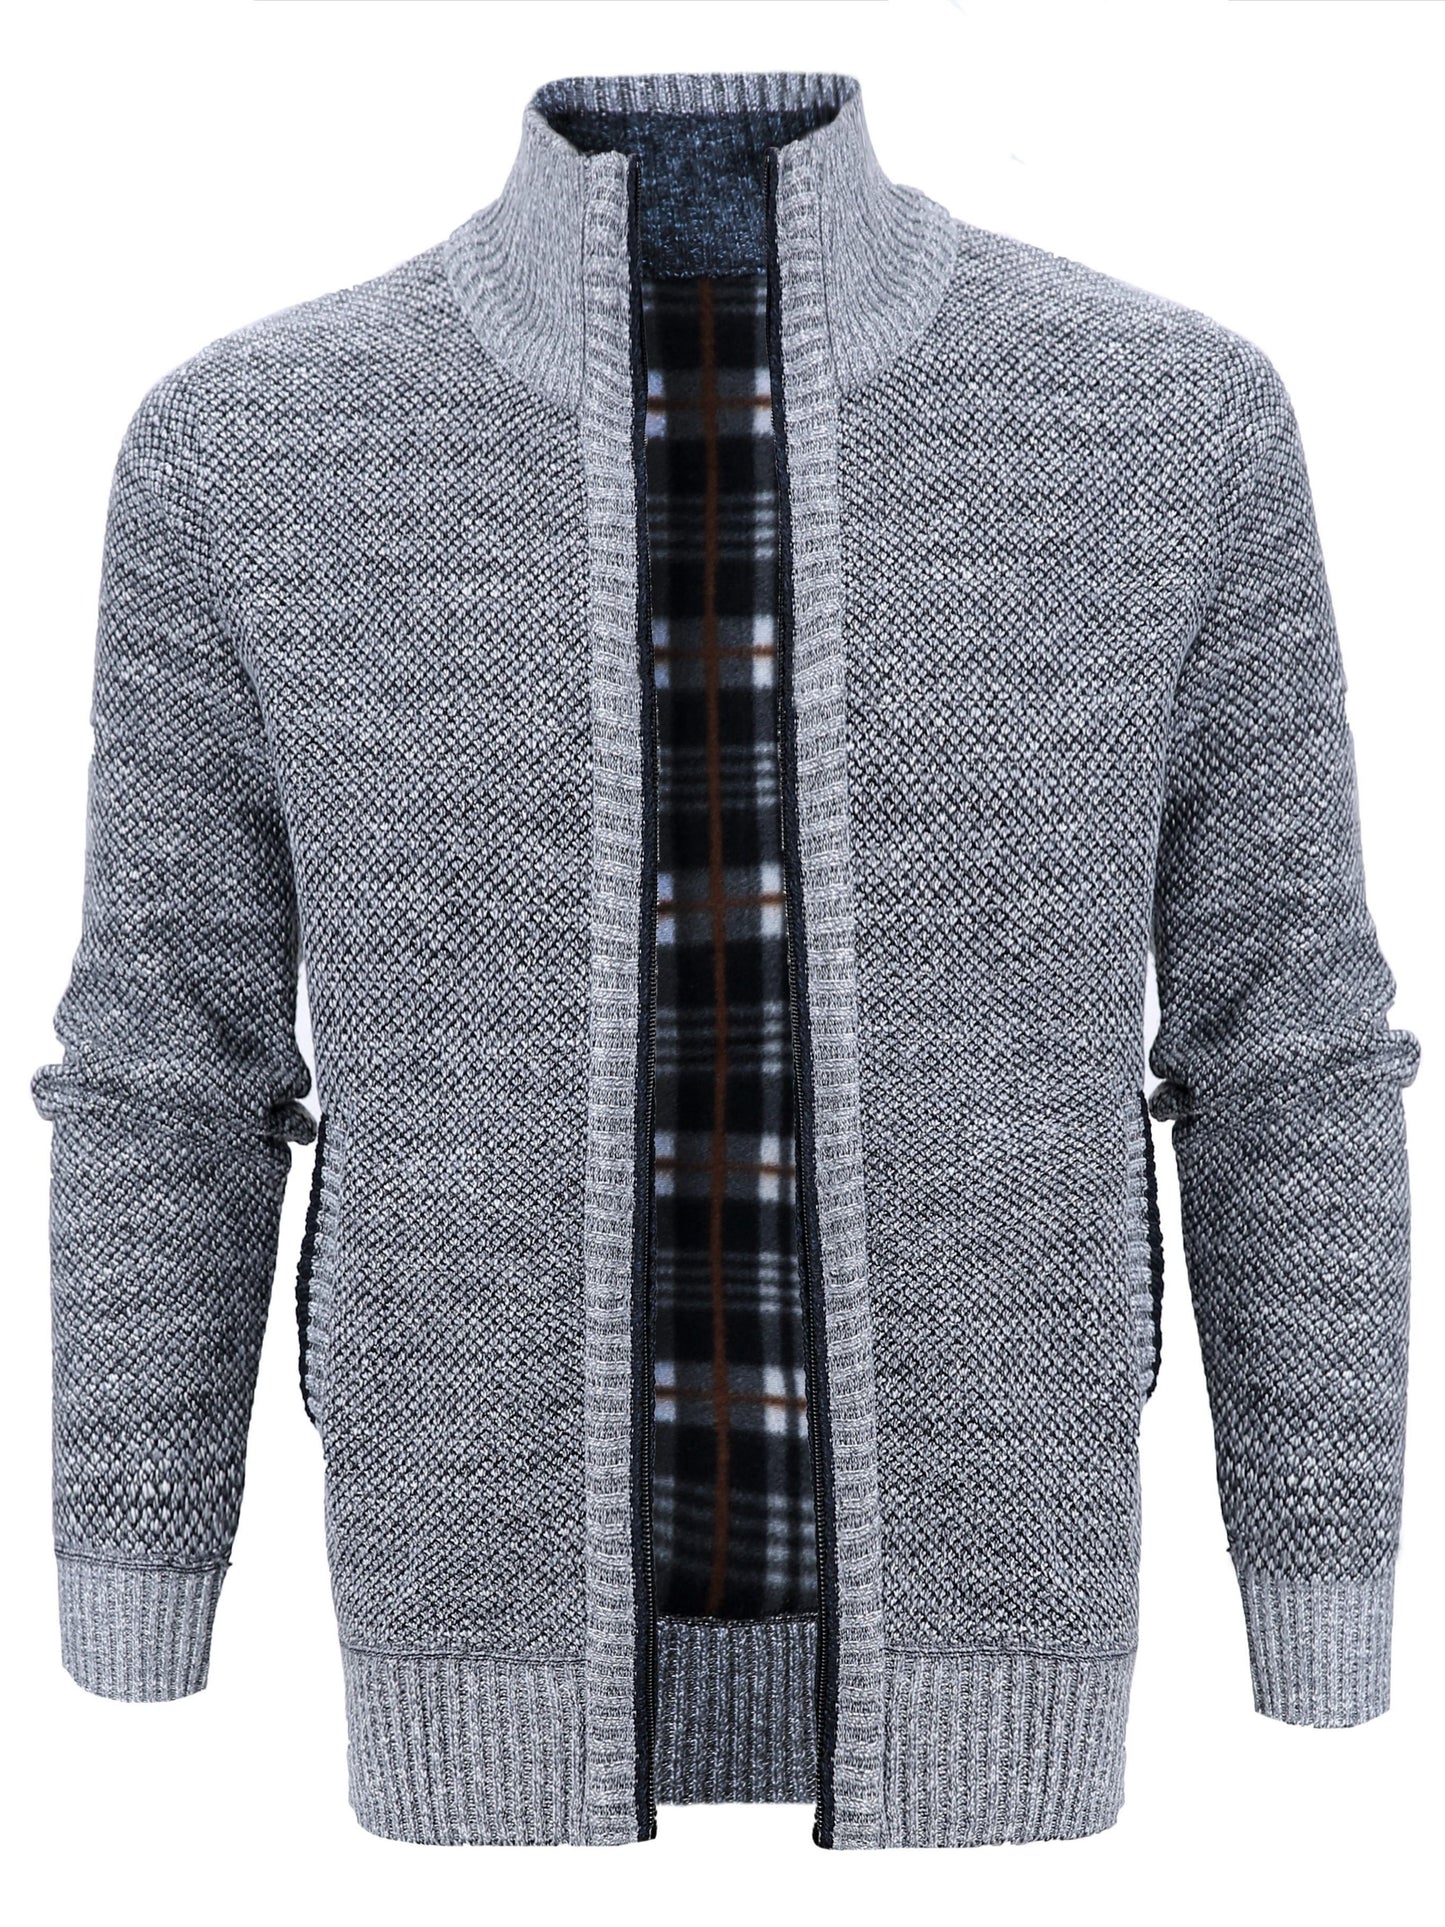 Foruwish - Warm Zip Up Jacket Sweater, Men's Casual Lapel Slant Pocket Solid Color Cardigan For Fall Winter